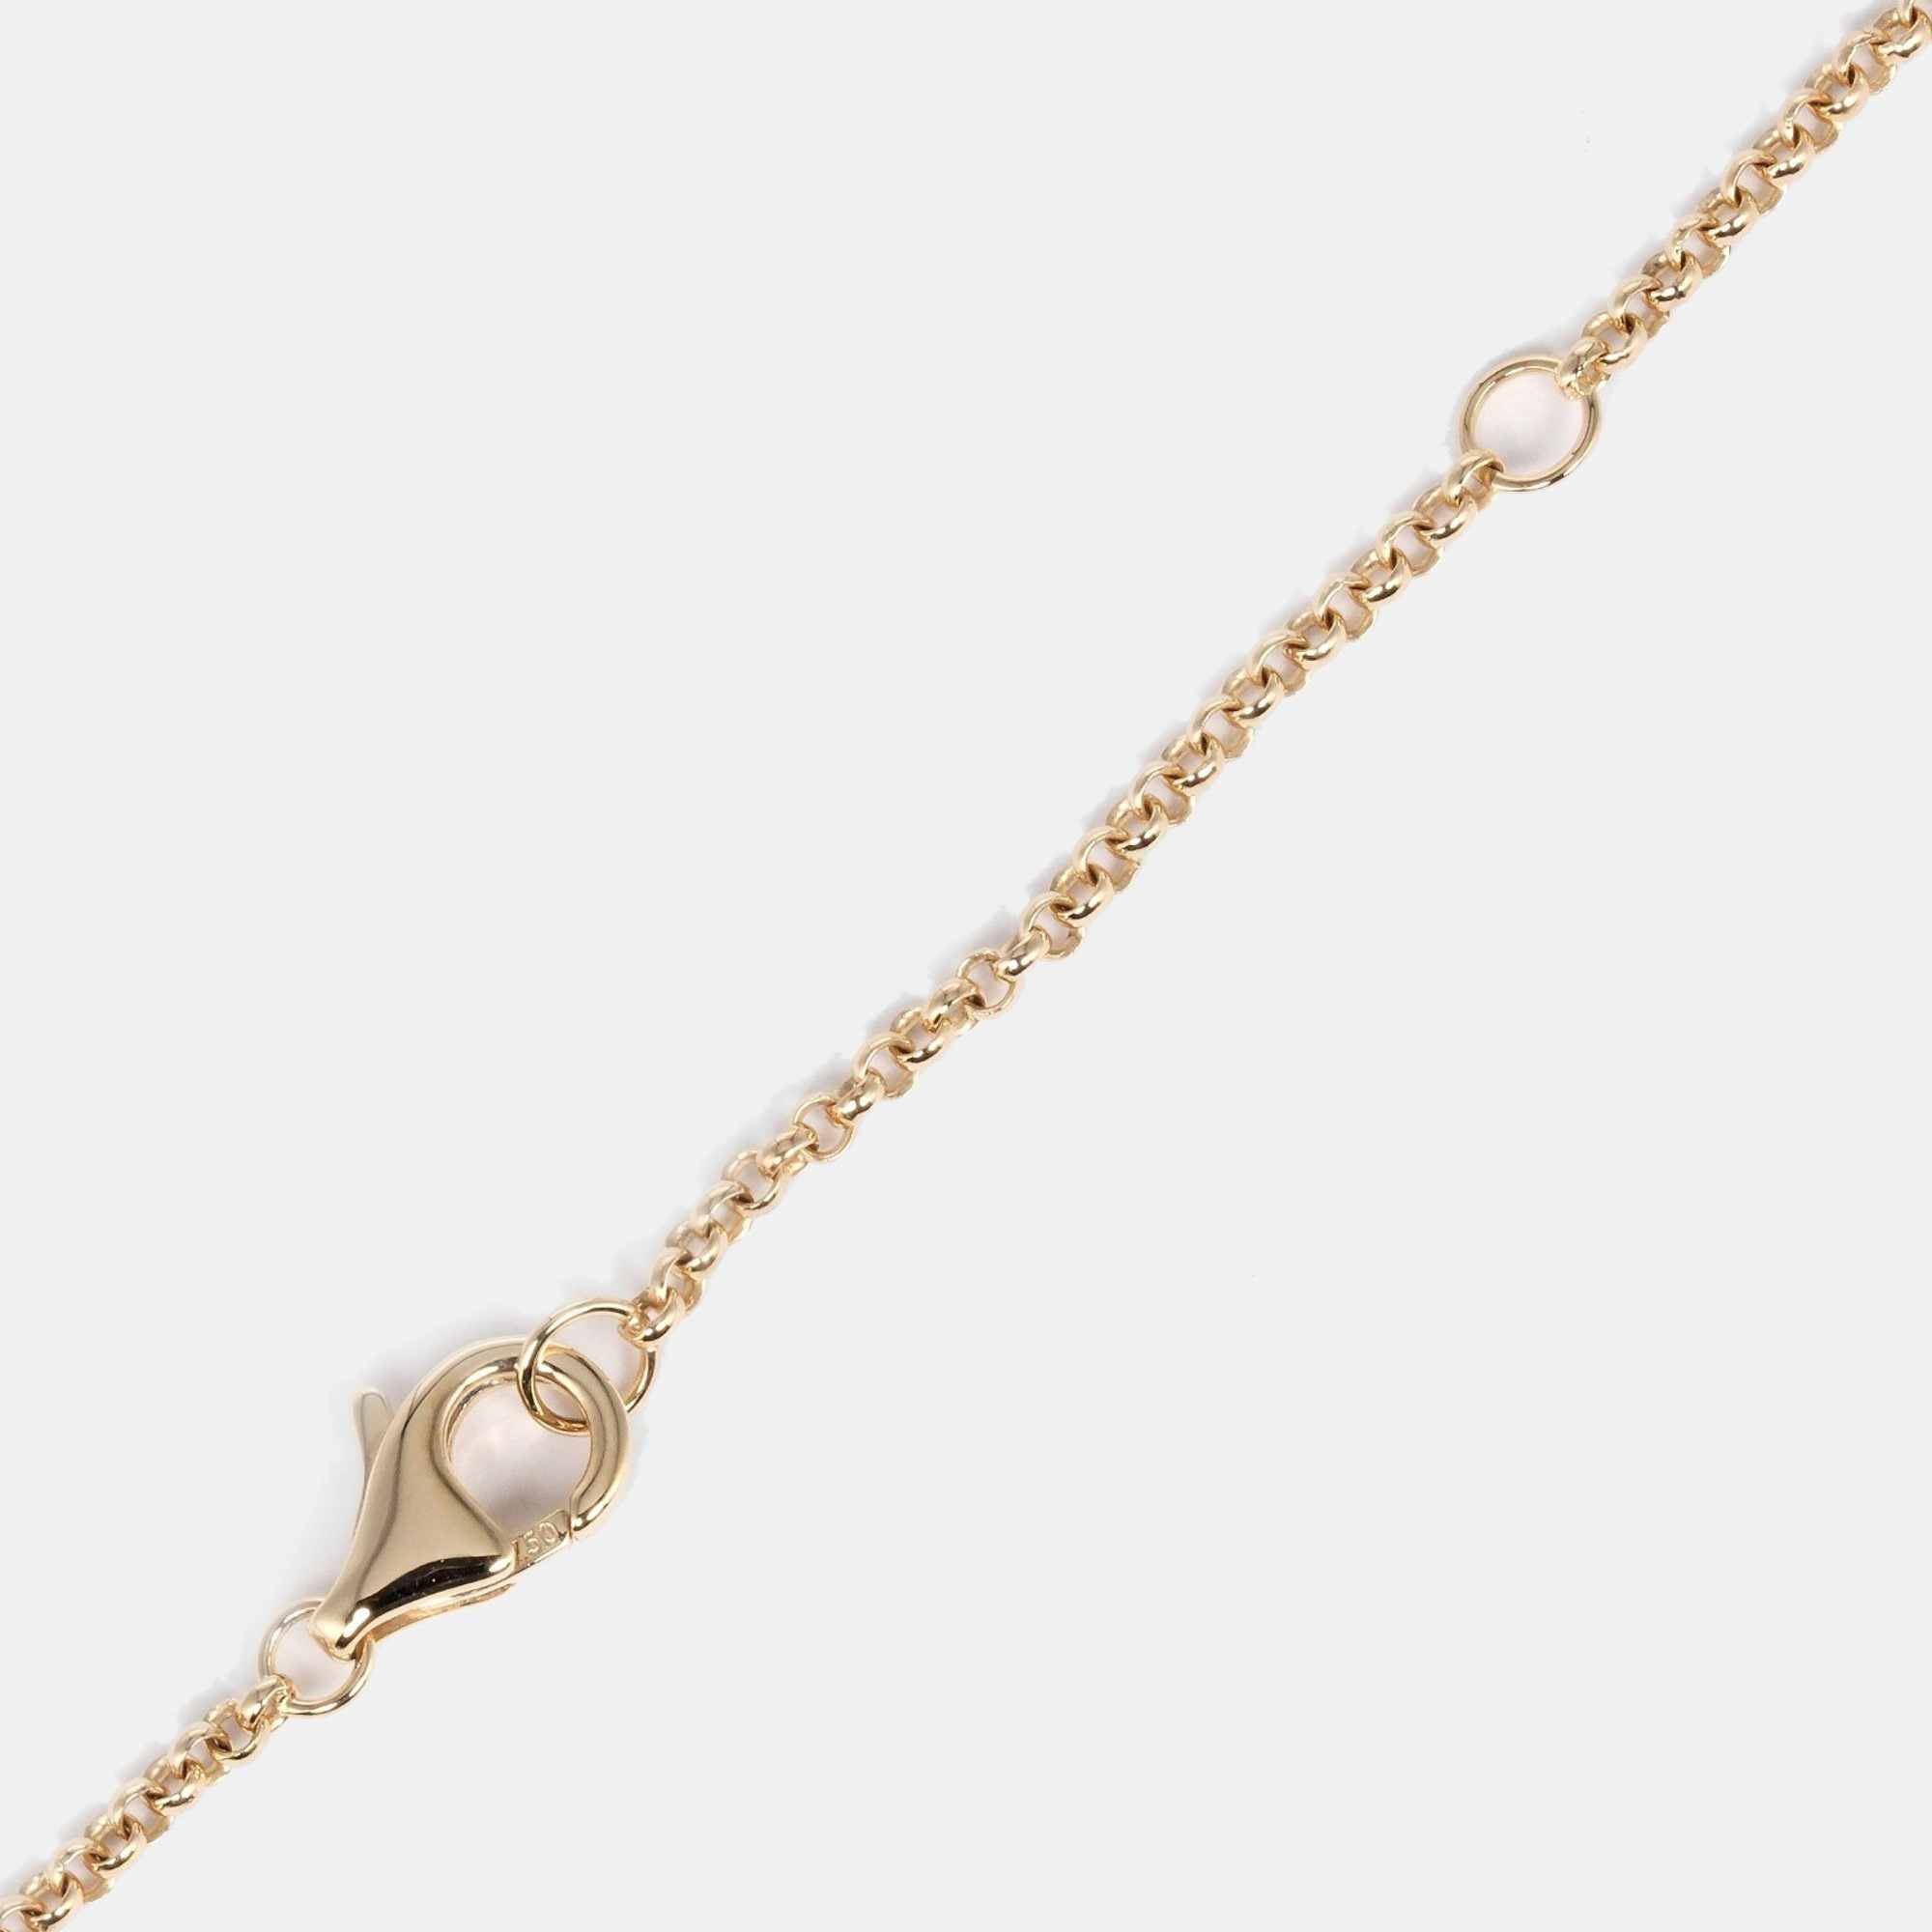 Cartier Agrafe 18K Yellow Gold Diamond Necklace